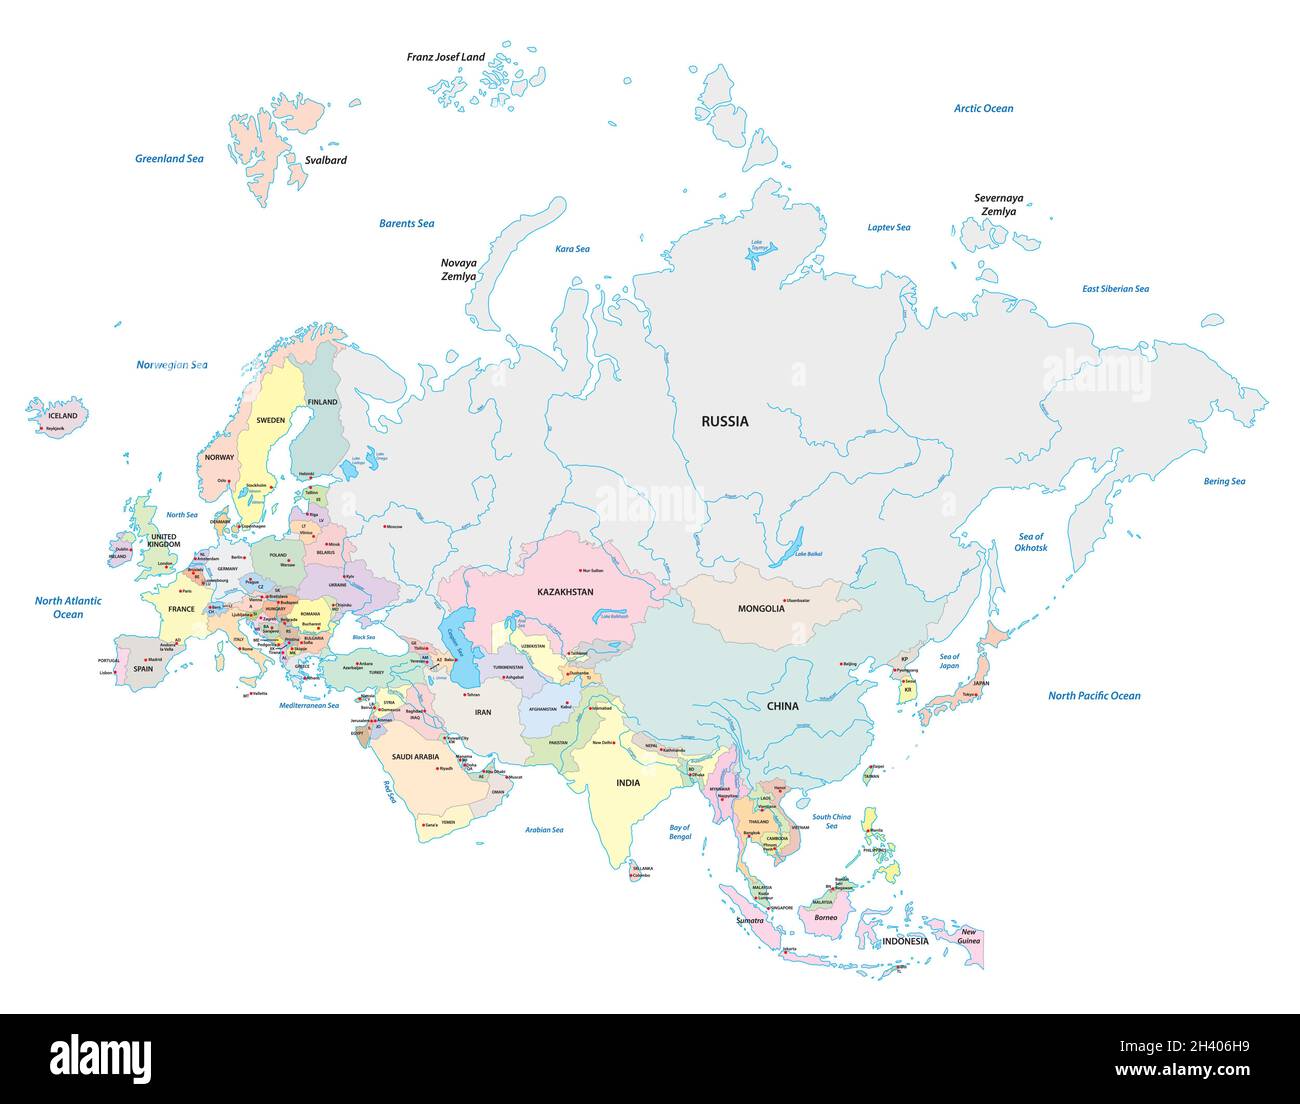 Mapa Vectorial Detallado De Los Dos Continentes Europa Y Asia Eurasia